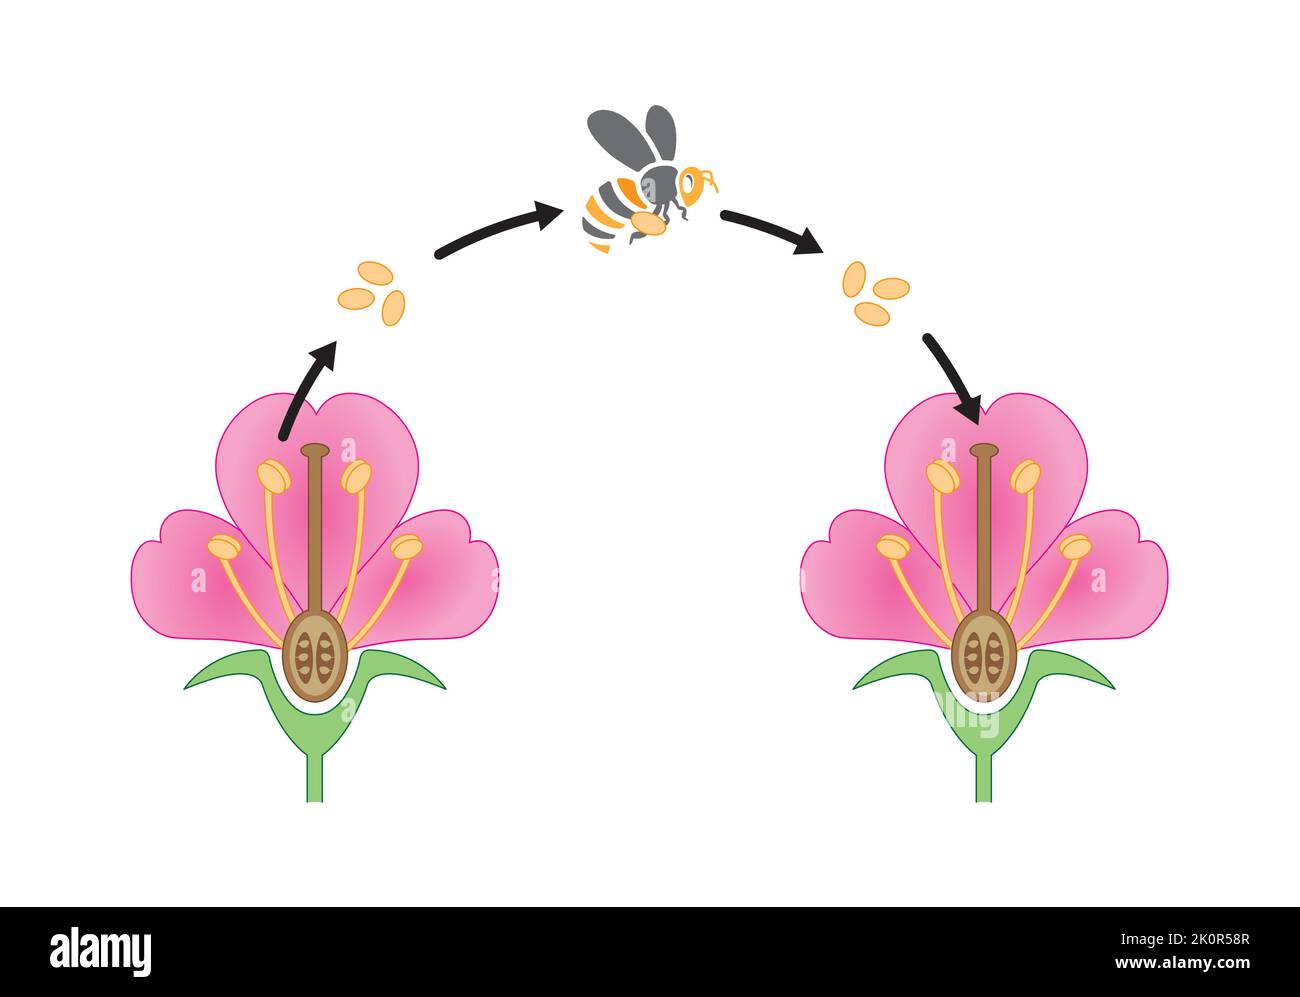 Scientific Designing of Pollination Process. The Most Important Factor in Plants Fertilization. Colorful Symbols. Vector Illustration. Stock Vector